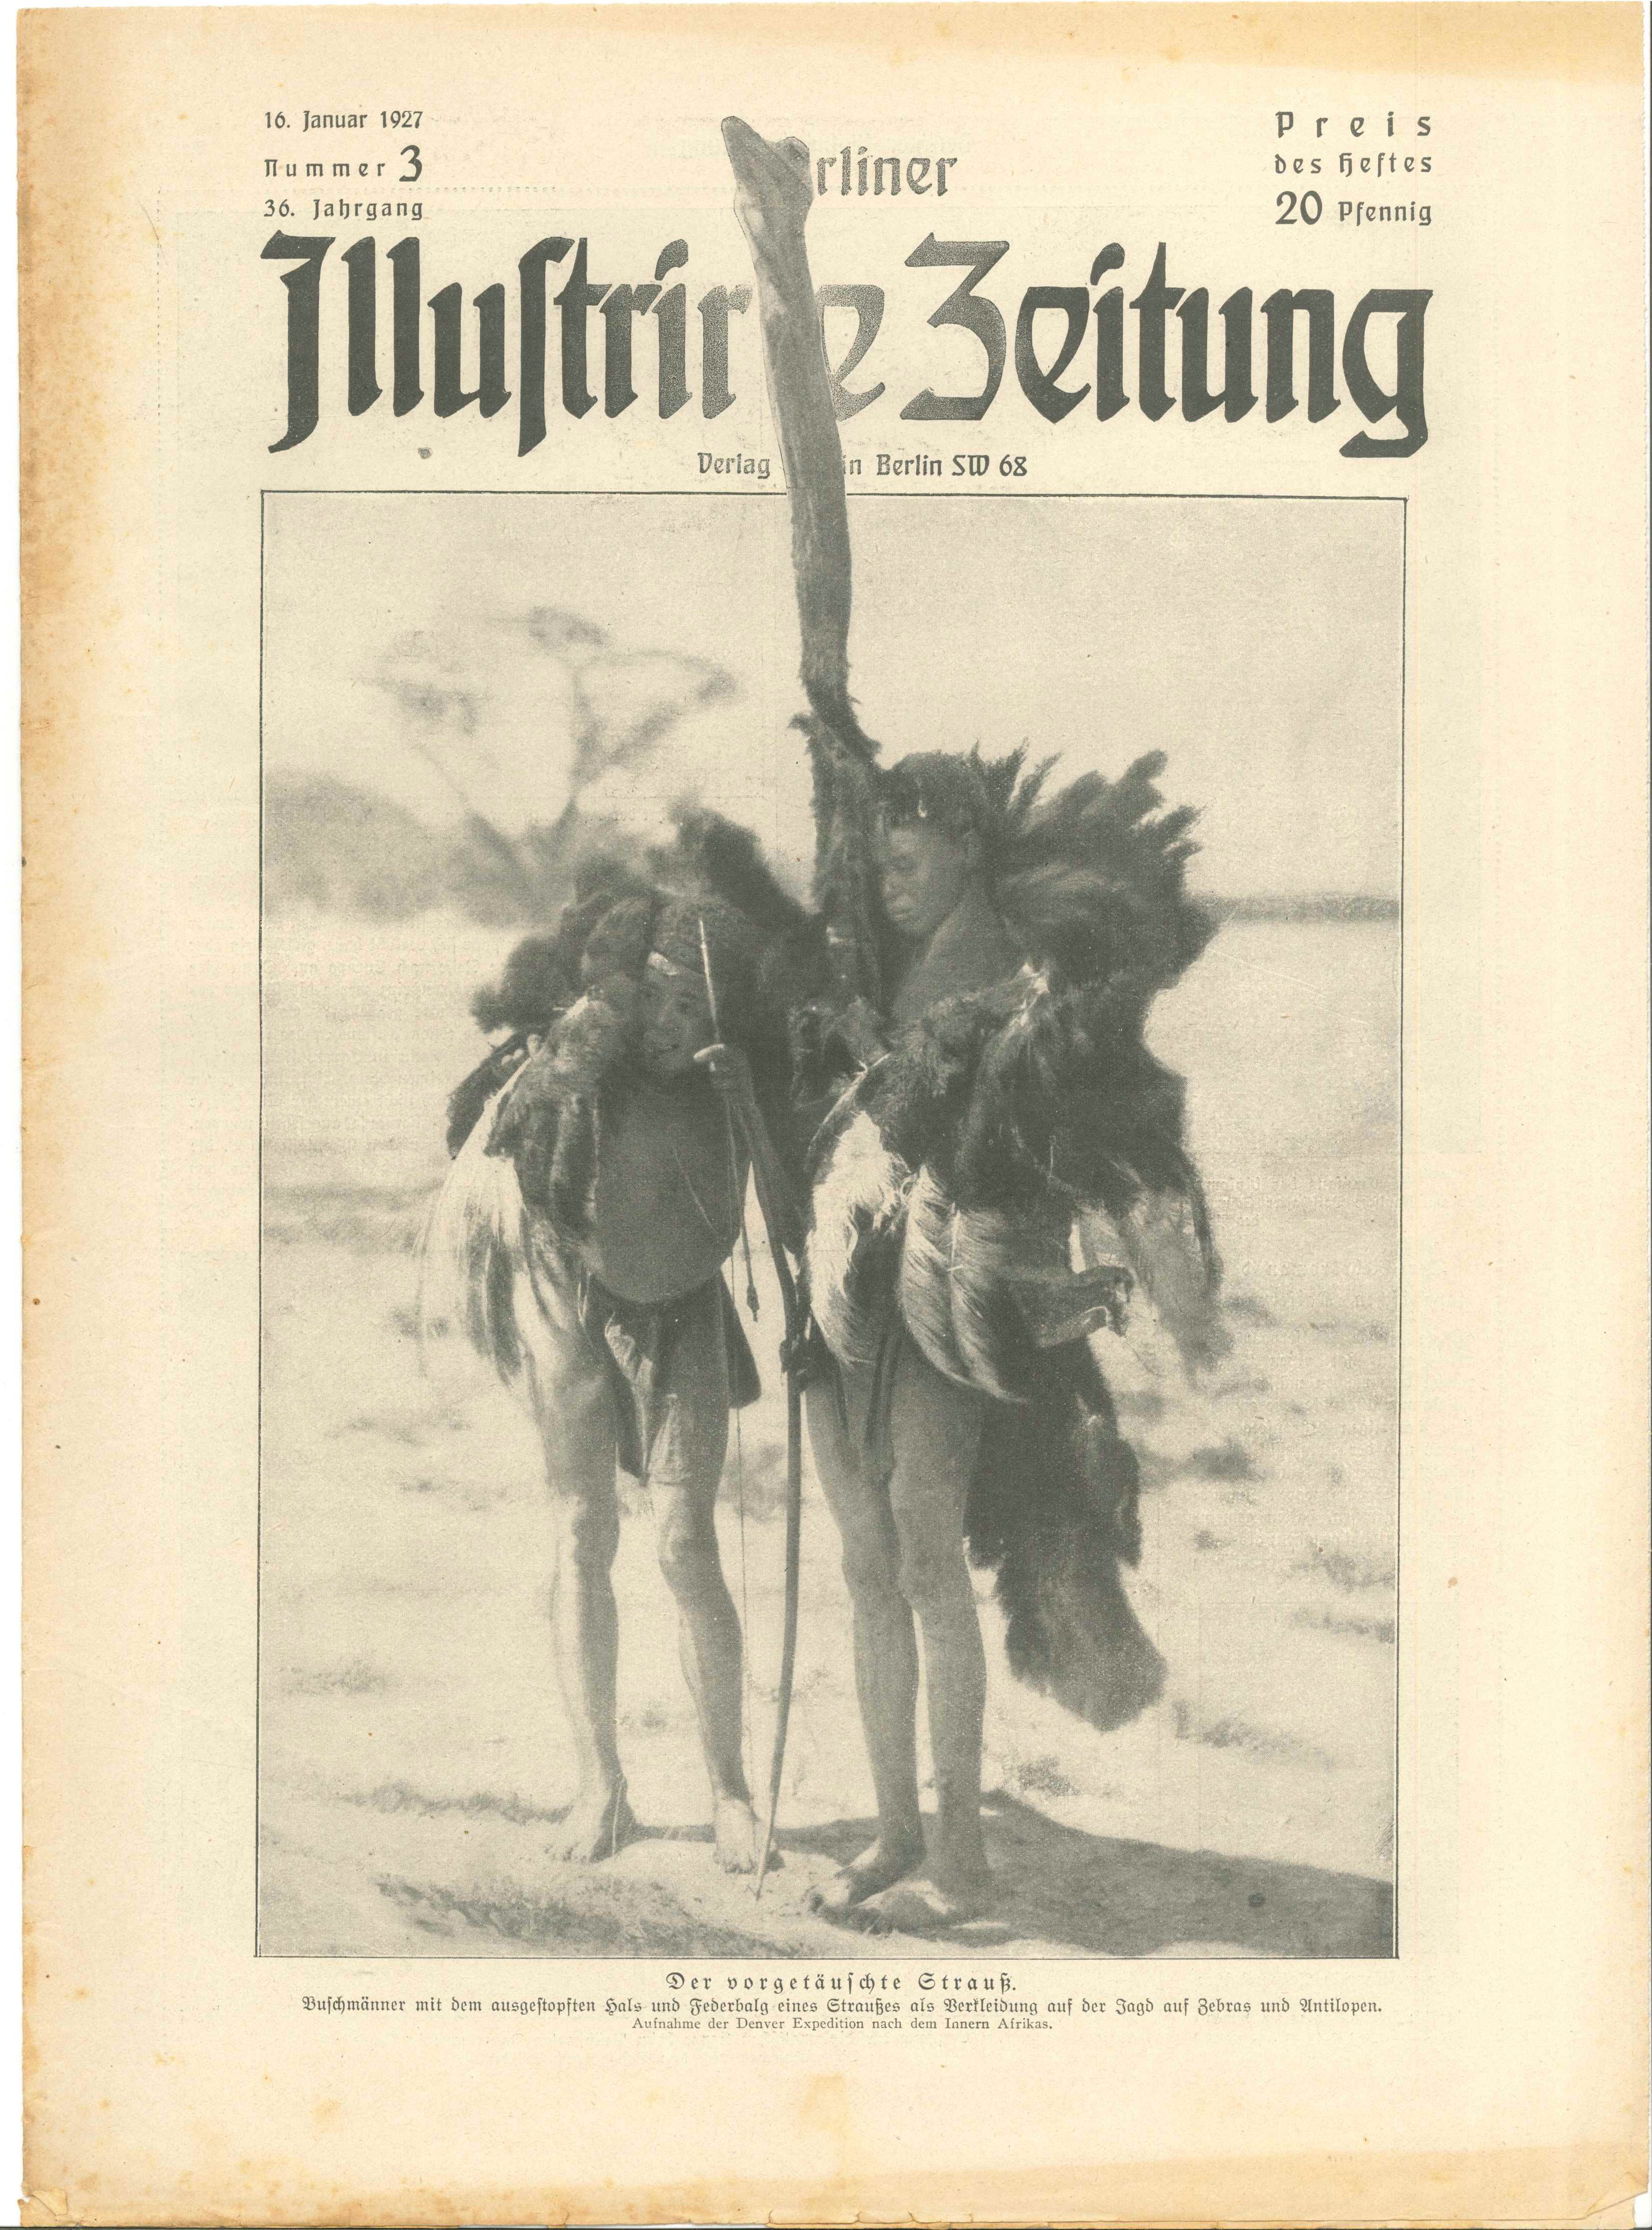 BIZ, Nr. 3, 1927, Titelseite (Kurt Tucholsky Literaturmuseum CC BY-NC-SA)